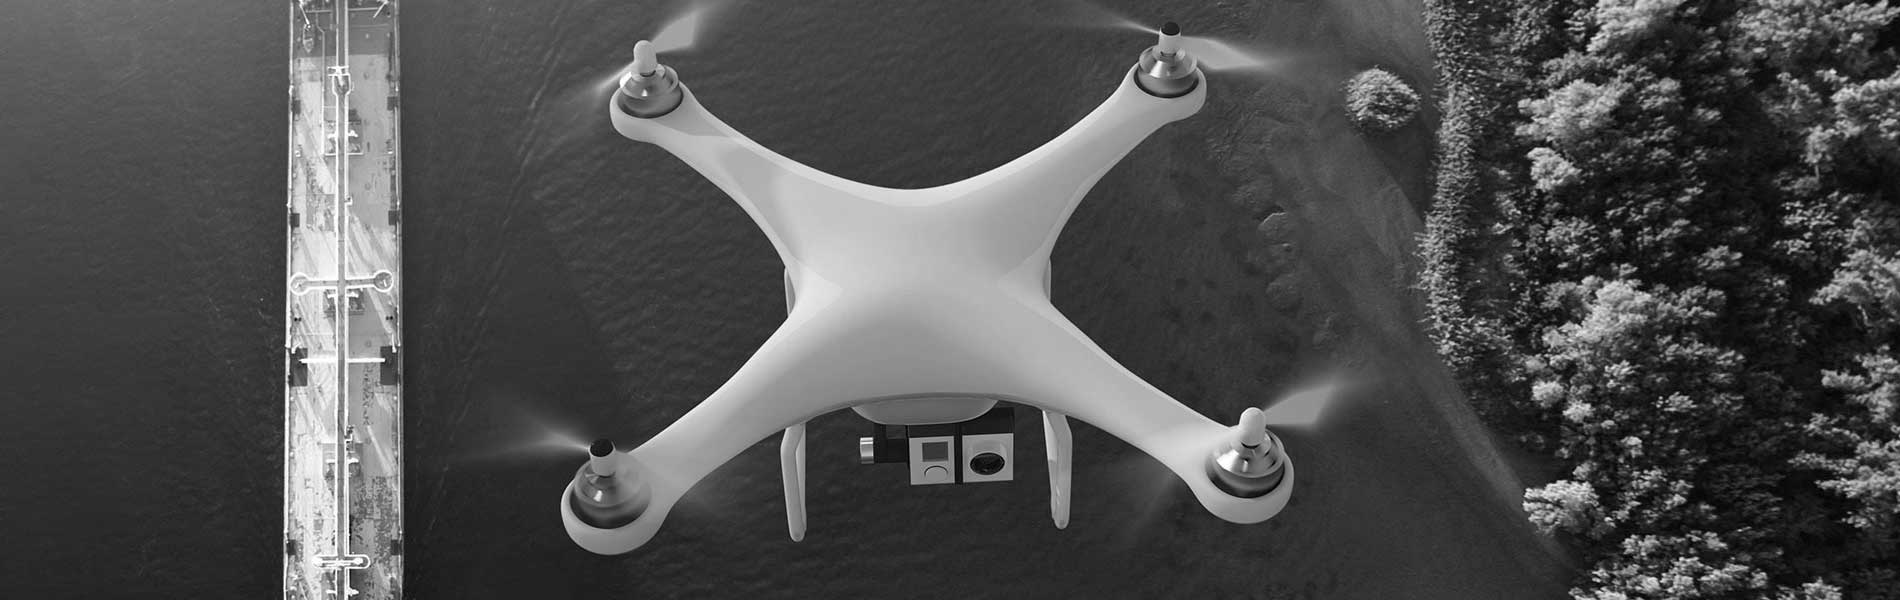 Drone mariage autorisation Bouc-Bel-Air (13320)